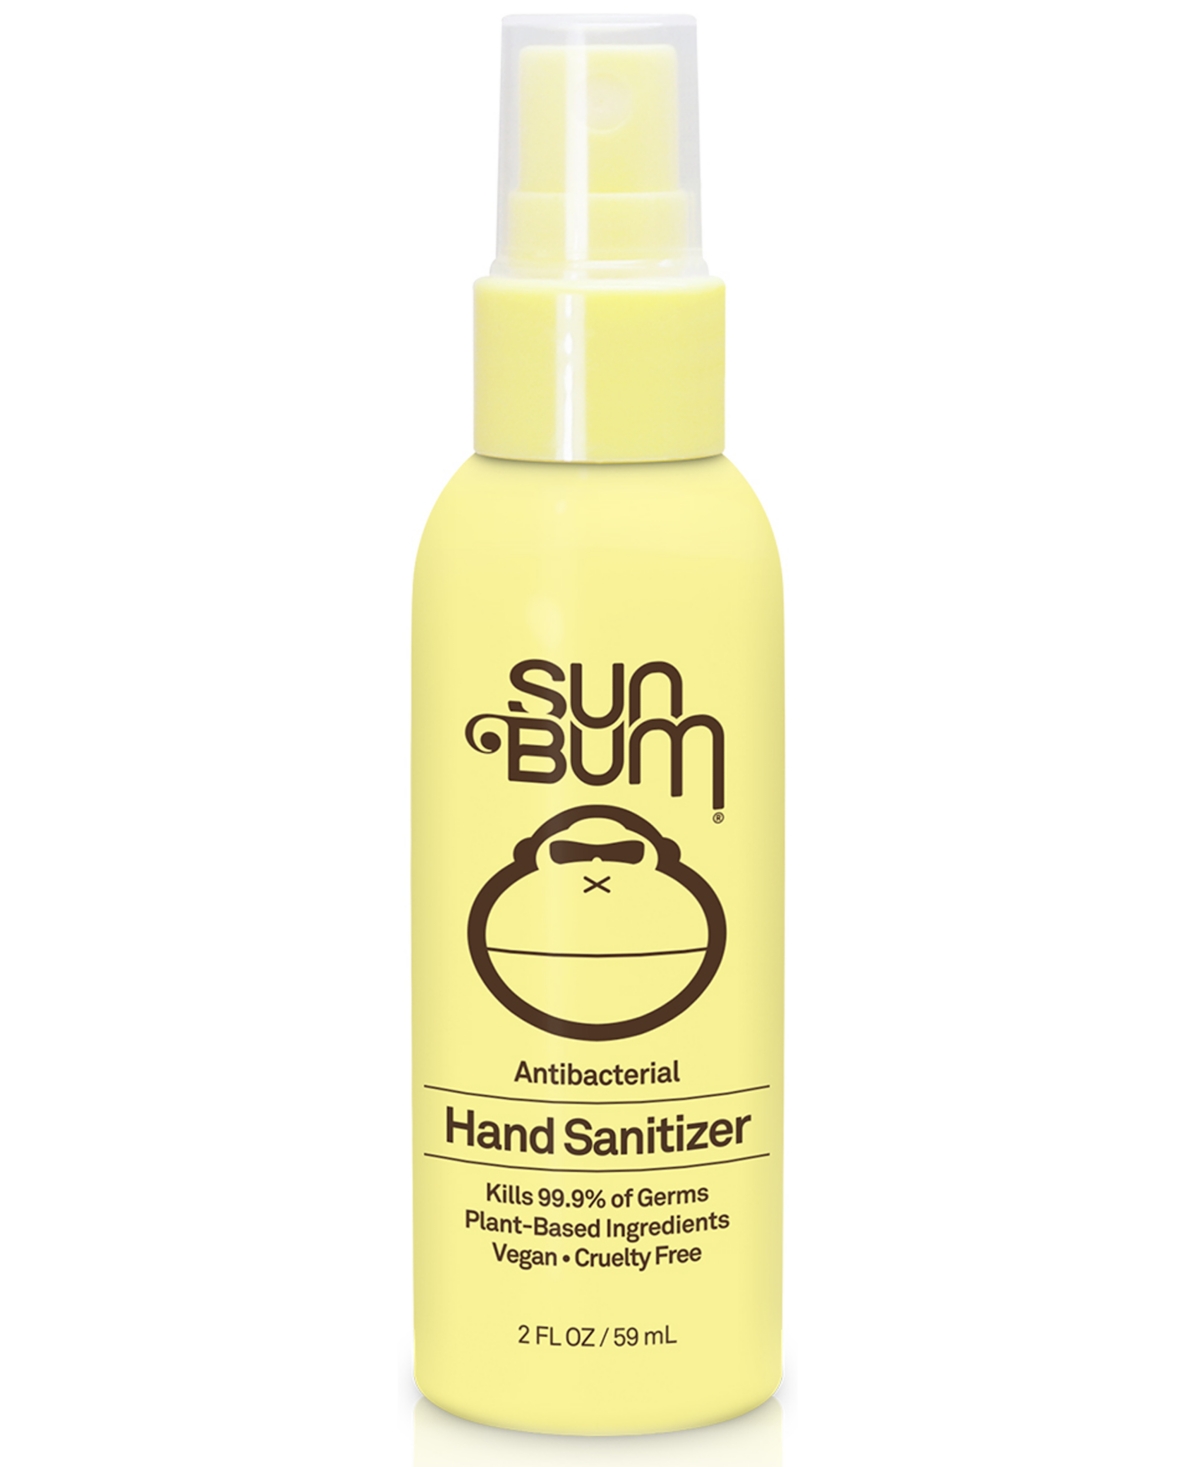 Sun Bum Hand Sanitizer